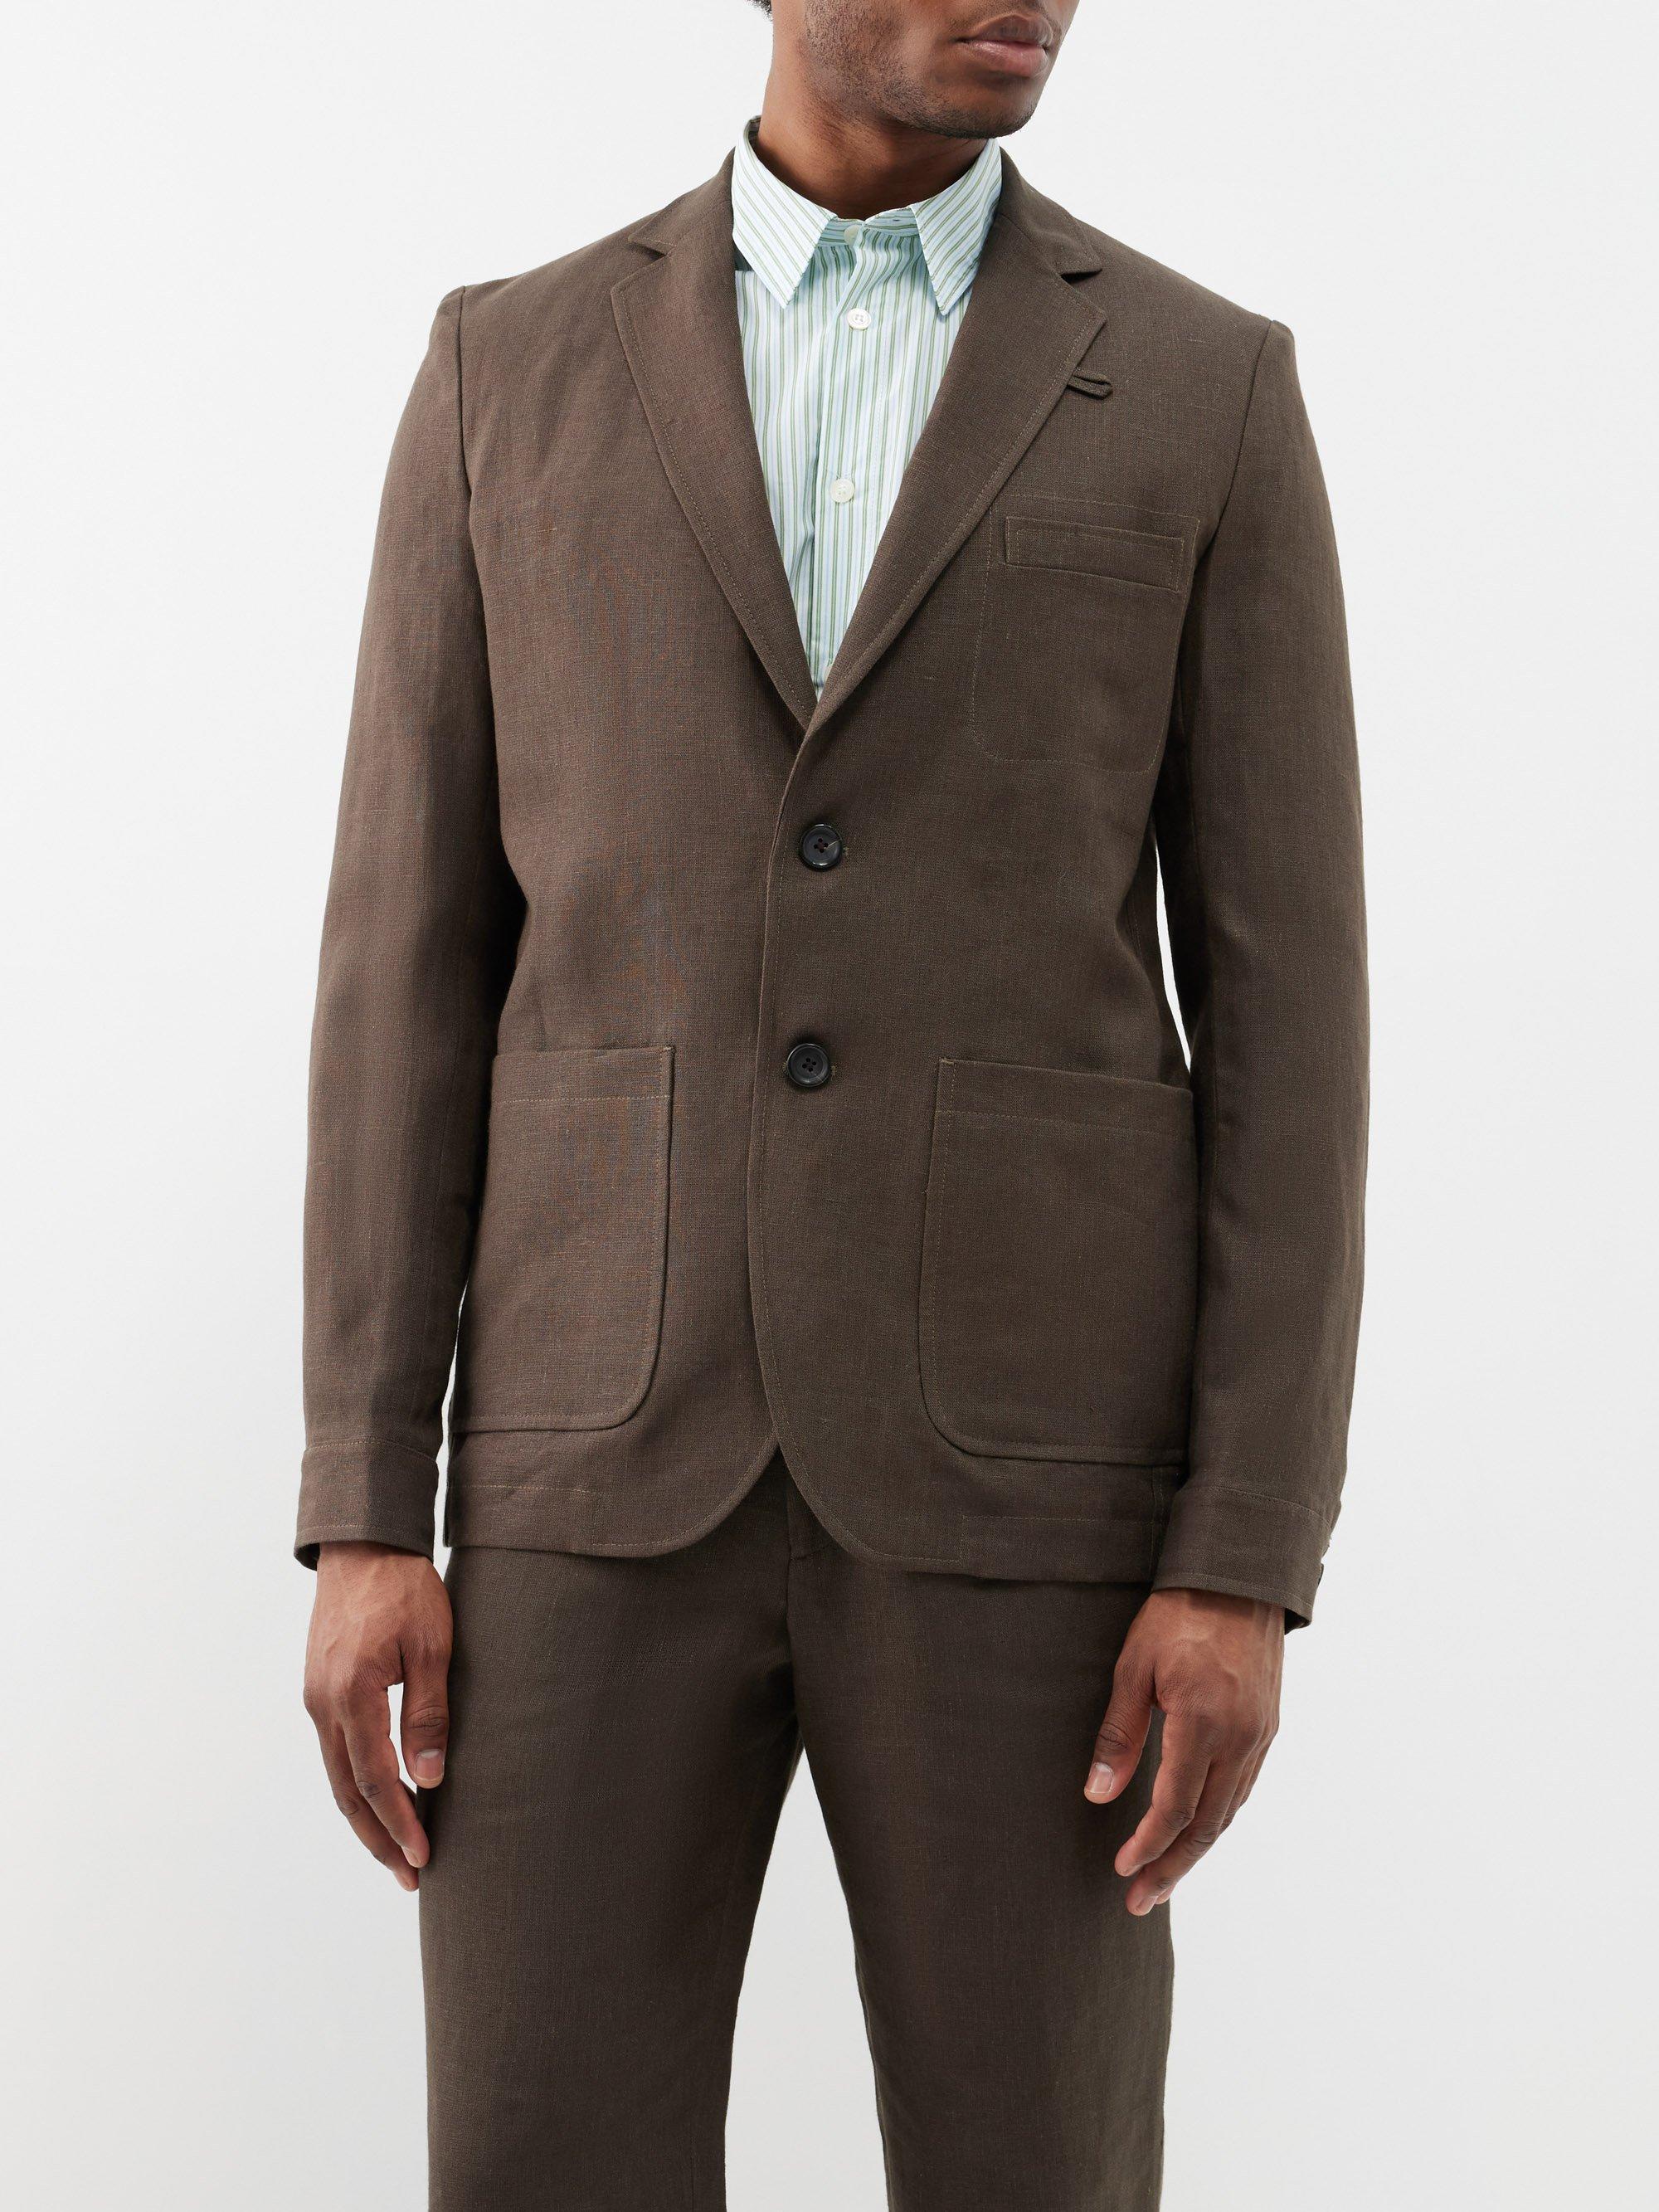 Oliver Spencer Theobald Oakes Linen Suit Jacket in Gray for Men | Lyst